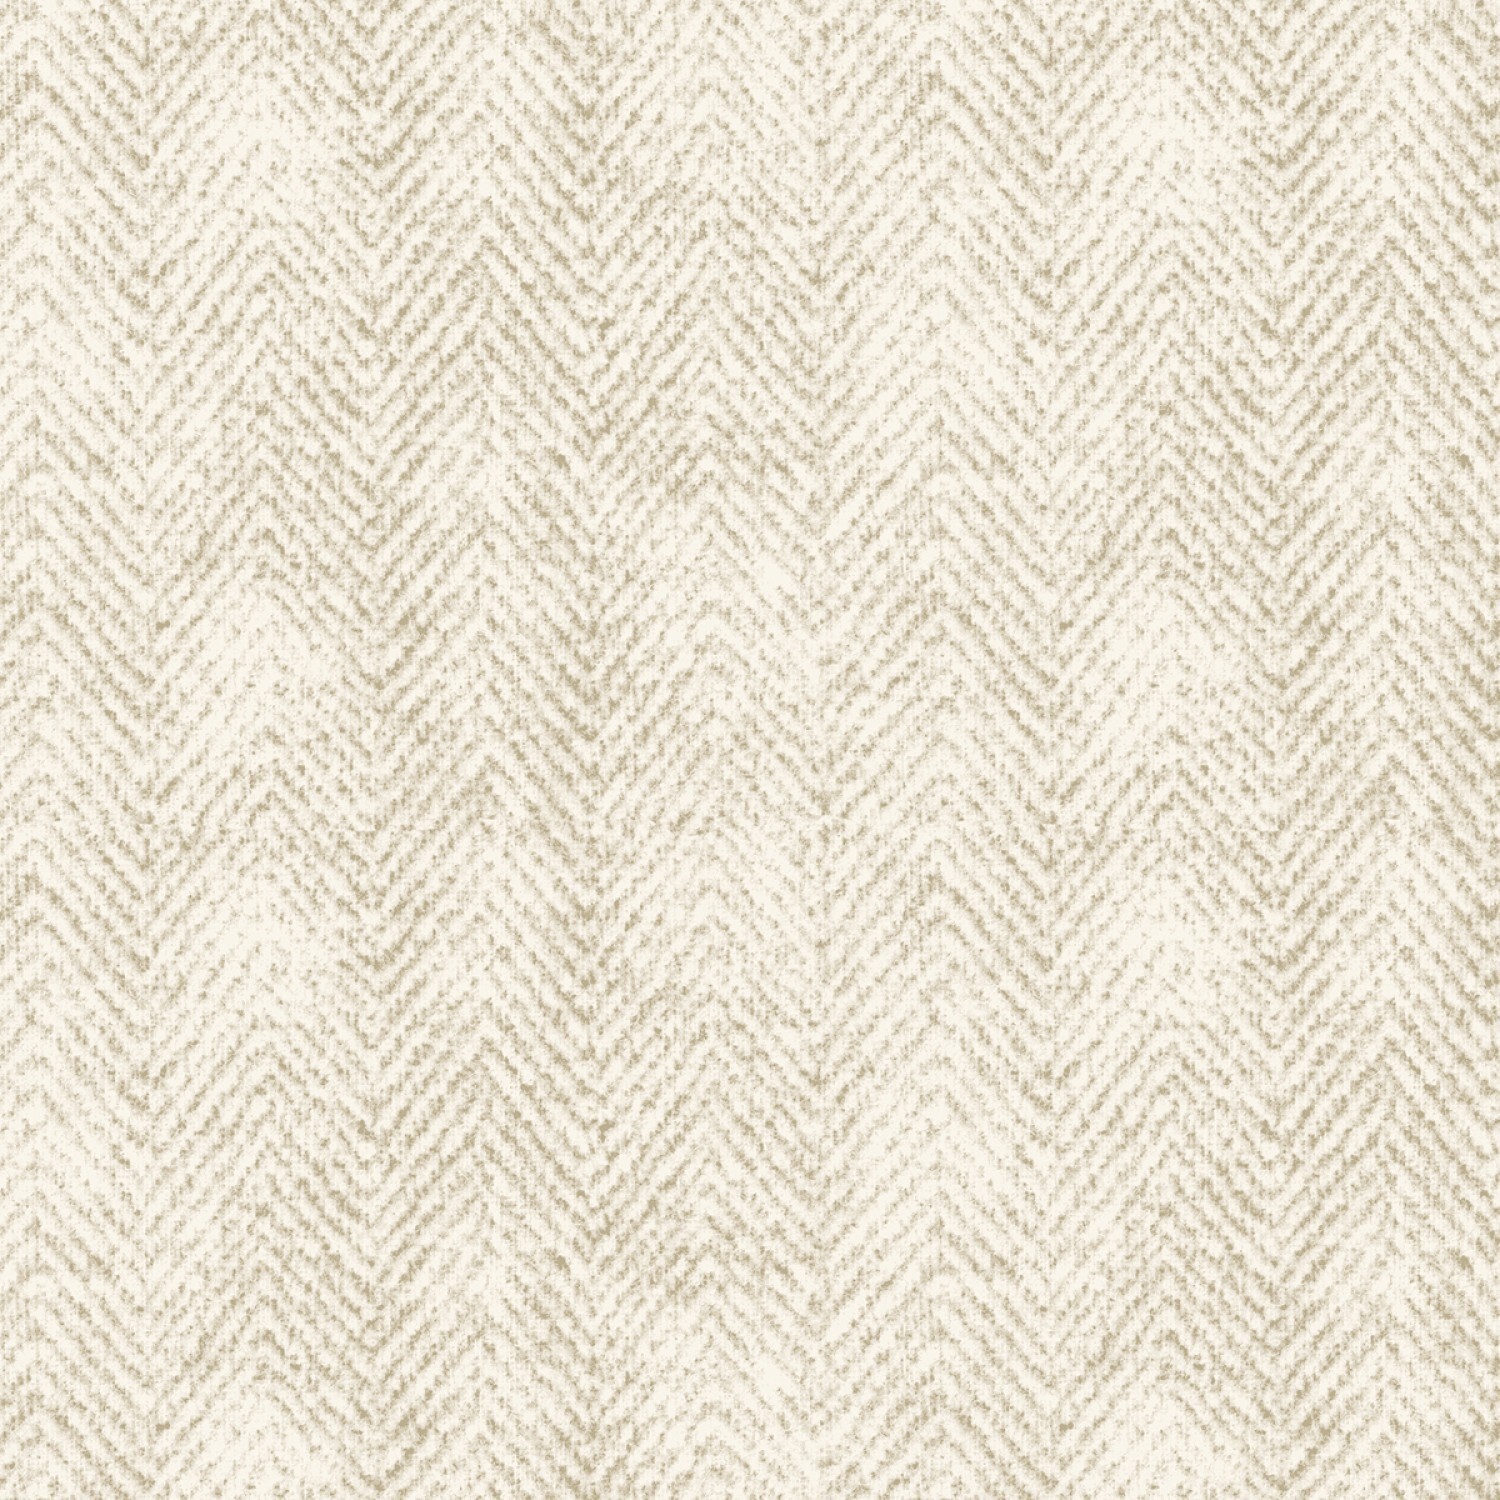 Woolies Flannel - Cream Herringbone - 1/2m cut 58228